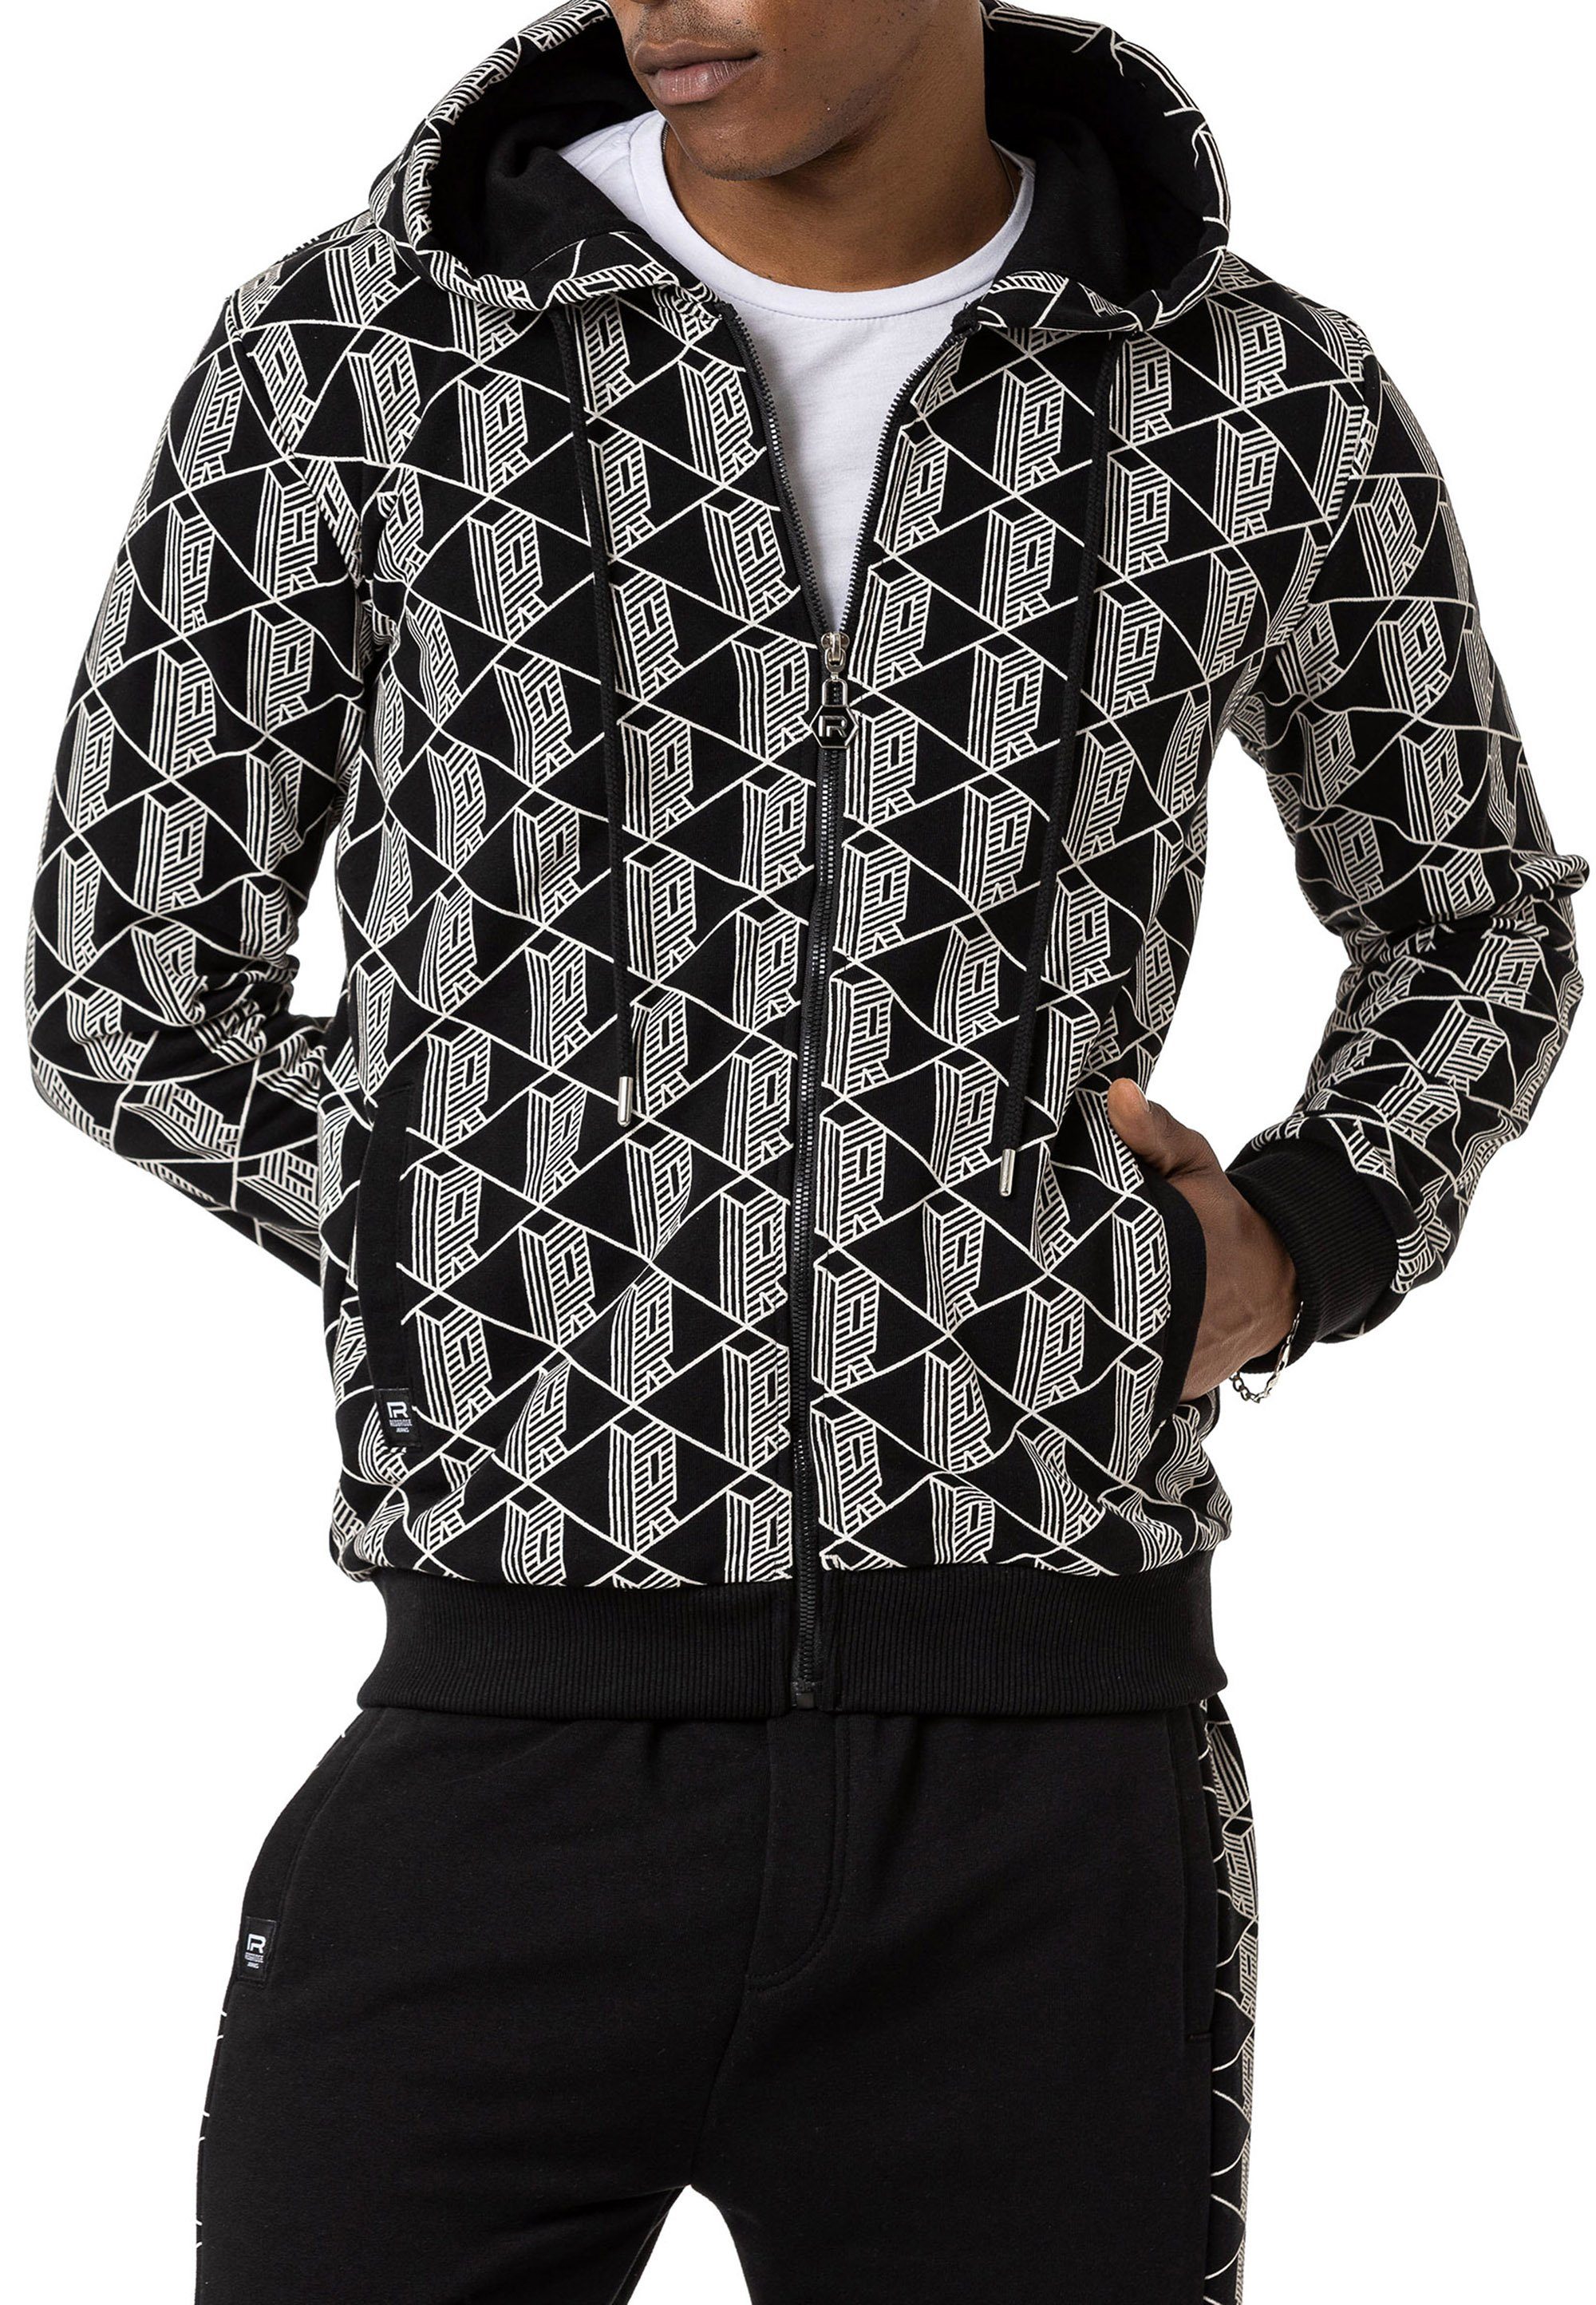 RedBridge Kapuzensweatjacke Sweater mit Kapuze Premium 3D Qualität Allover-Print Schwarz